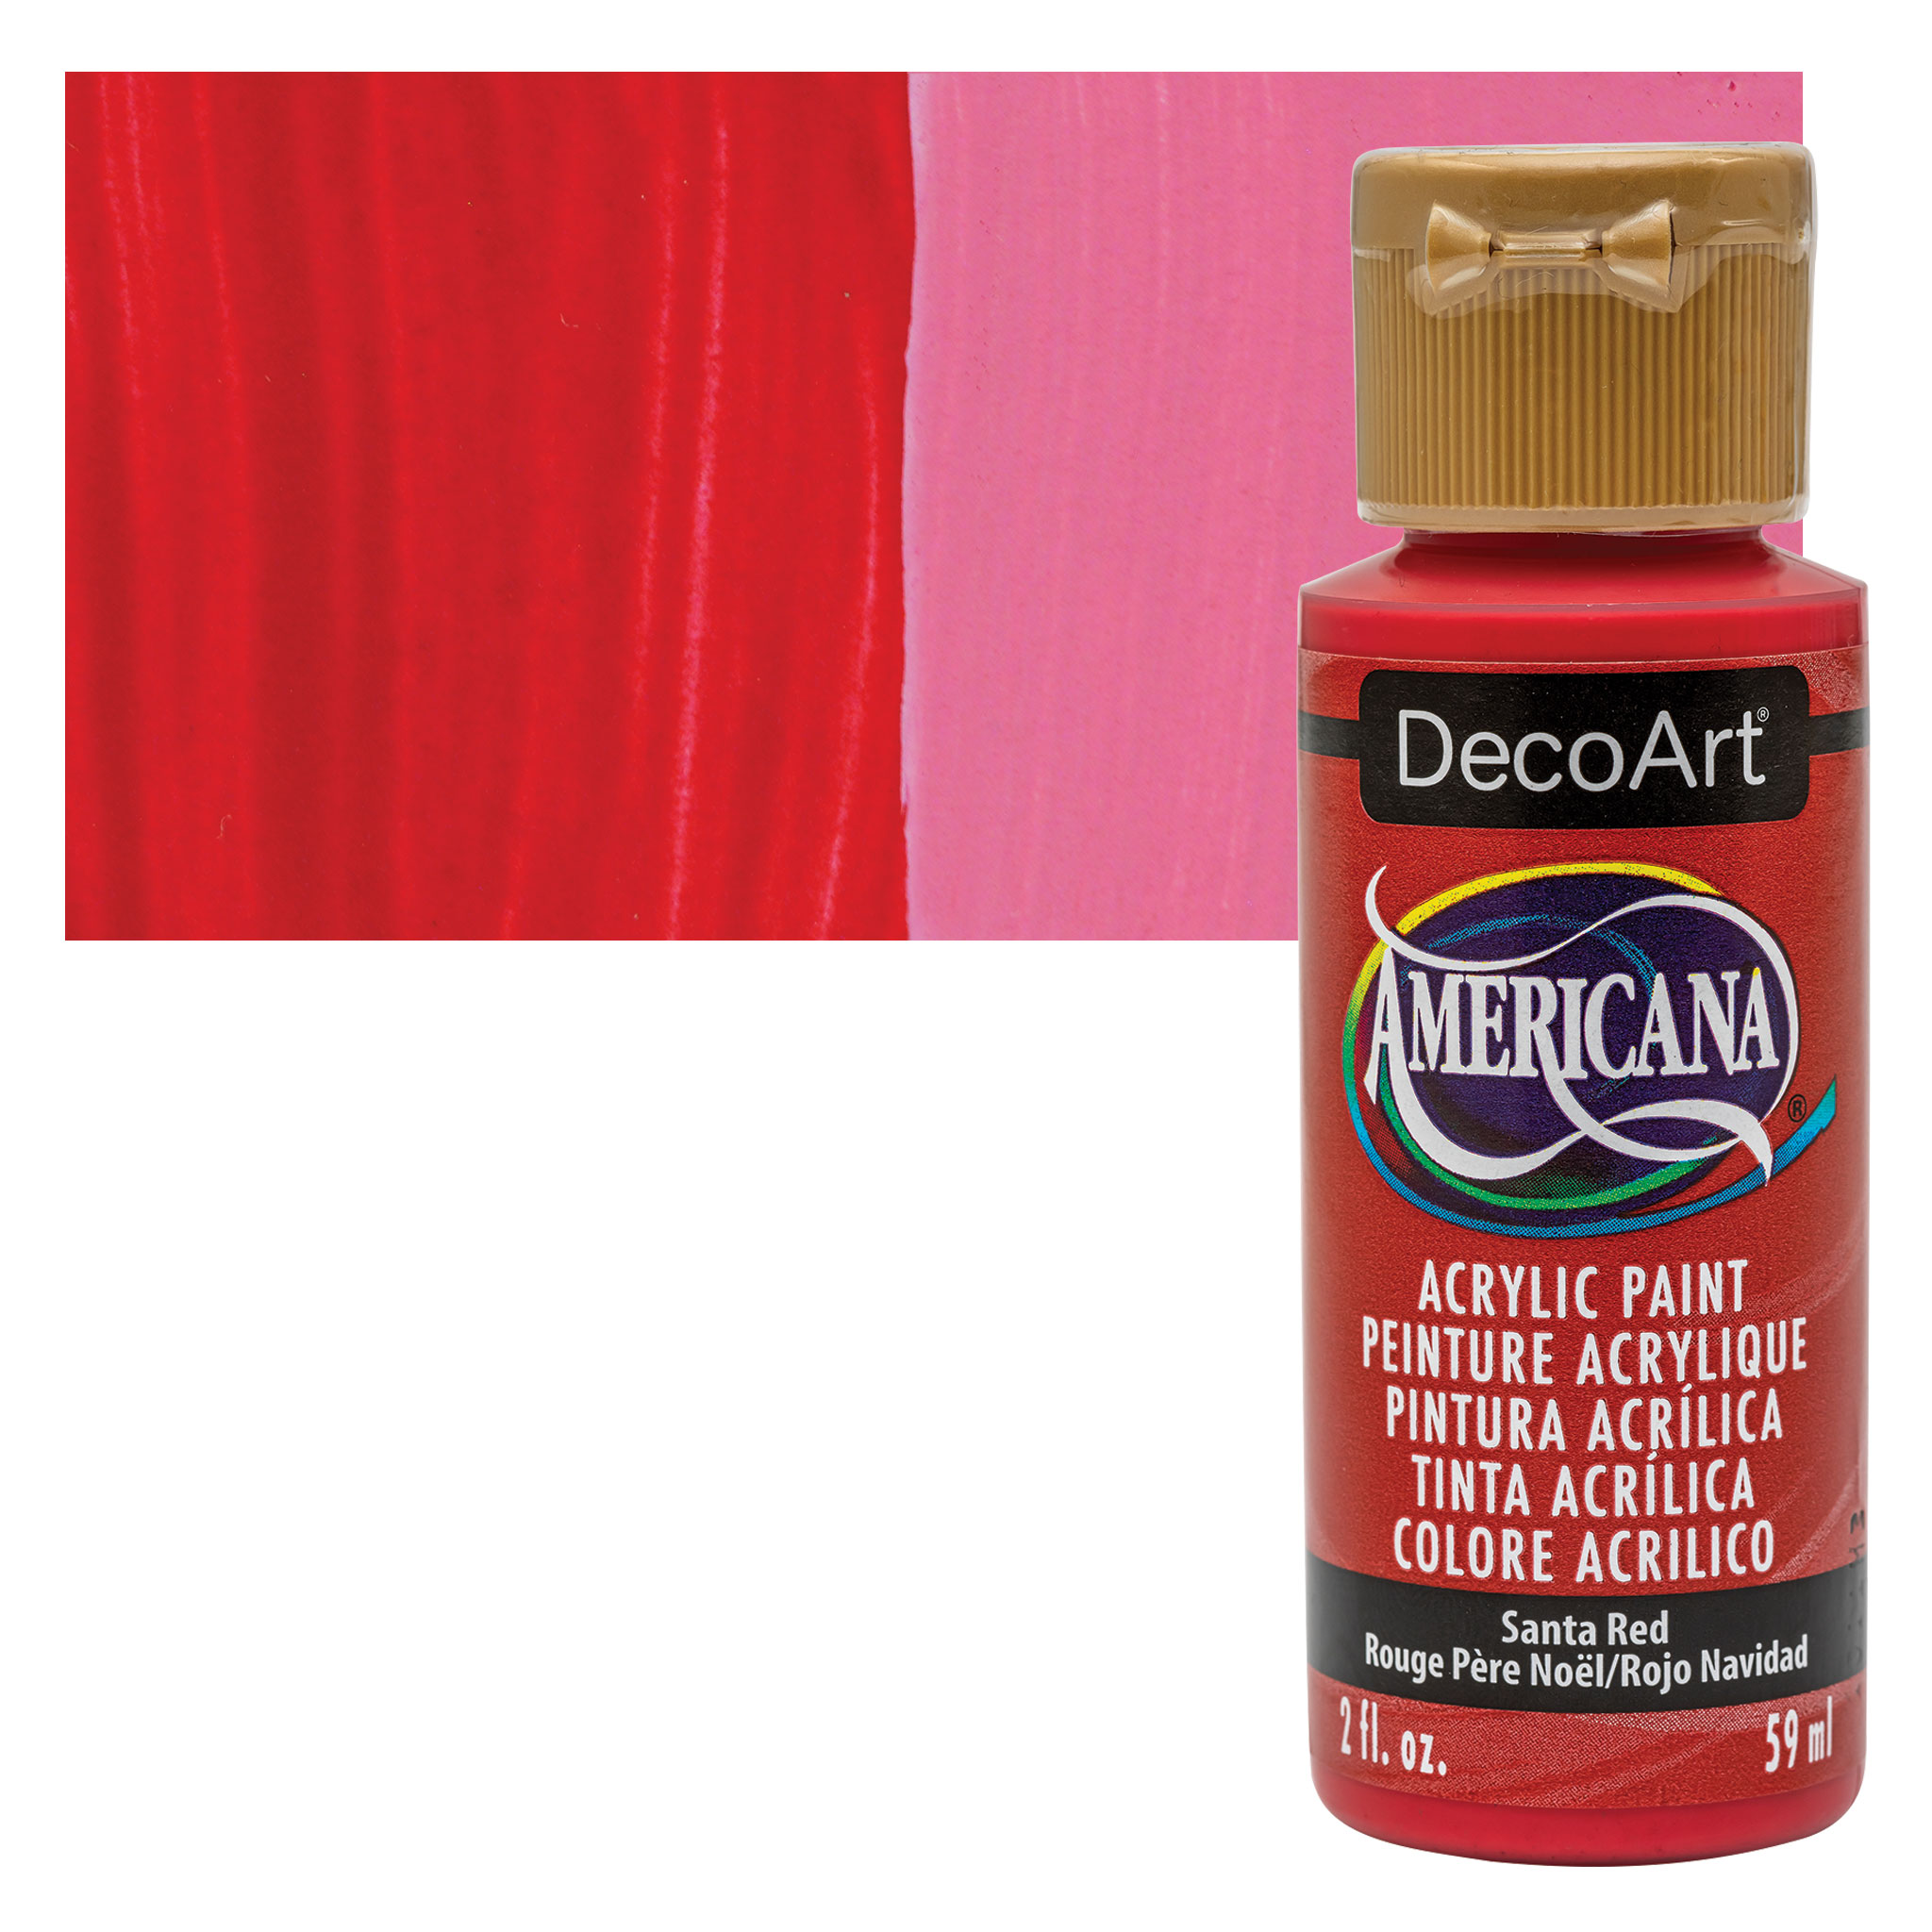 DecoArt Americana 2 oz. Cherry Red Acrylic Paint DA159-3 - The Home Depot